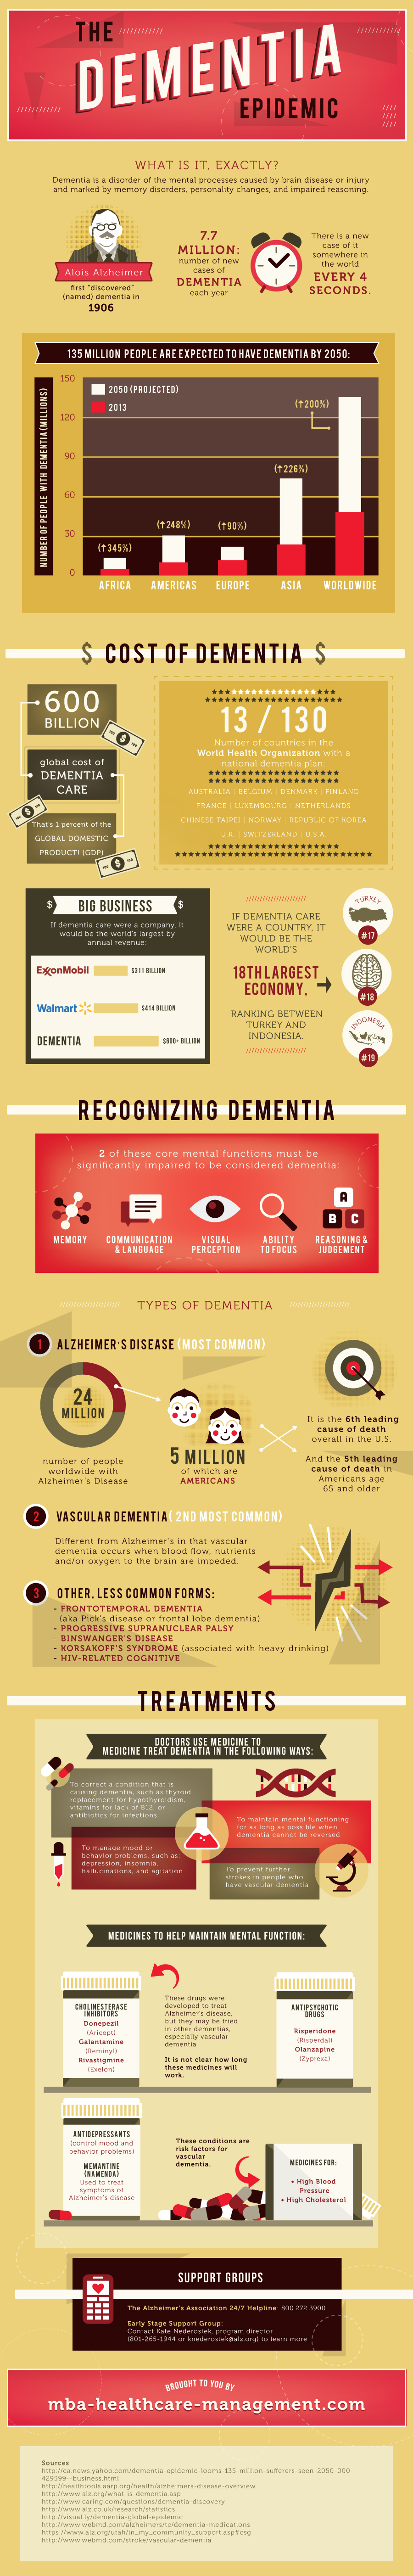 The Dementia Epidemic